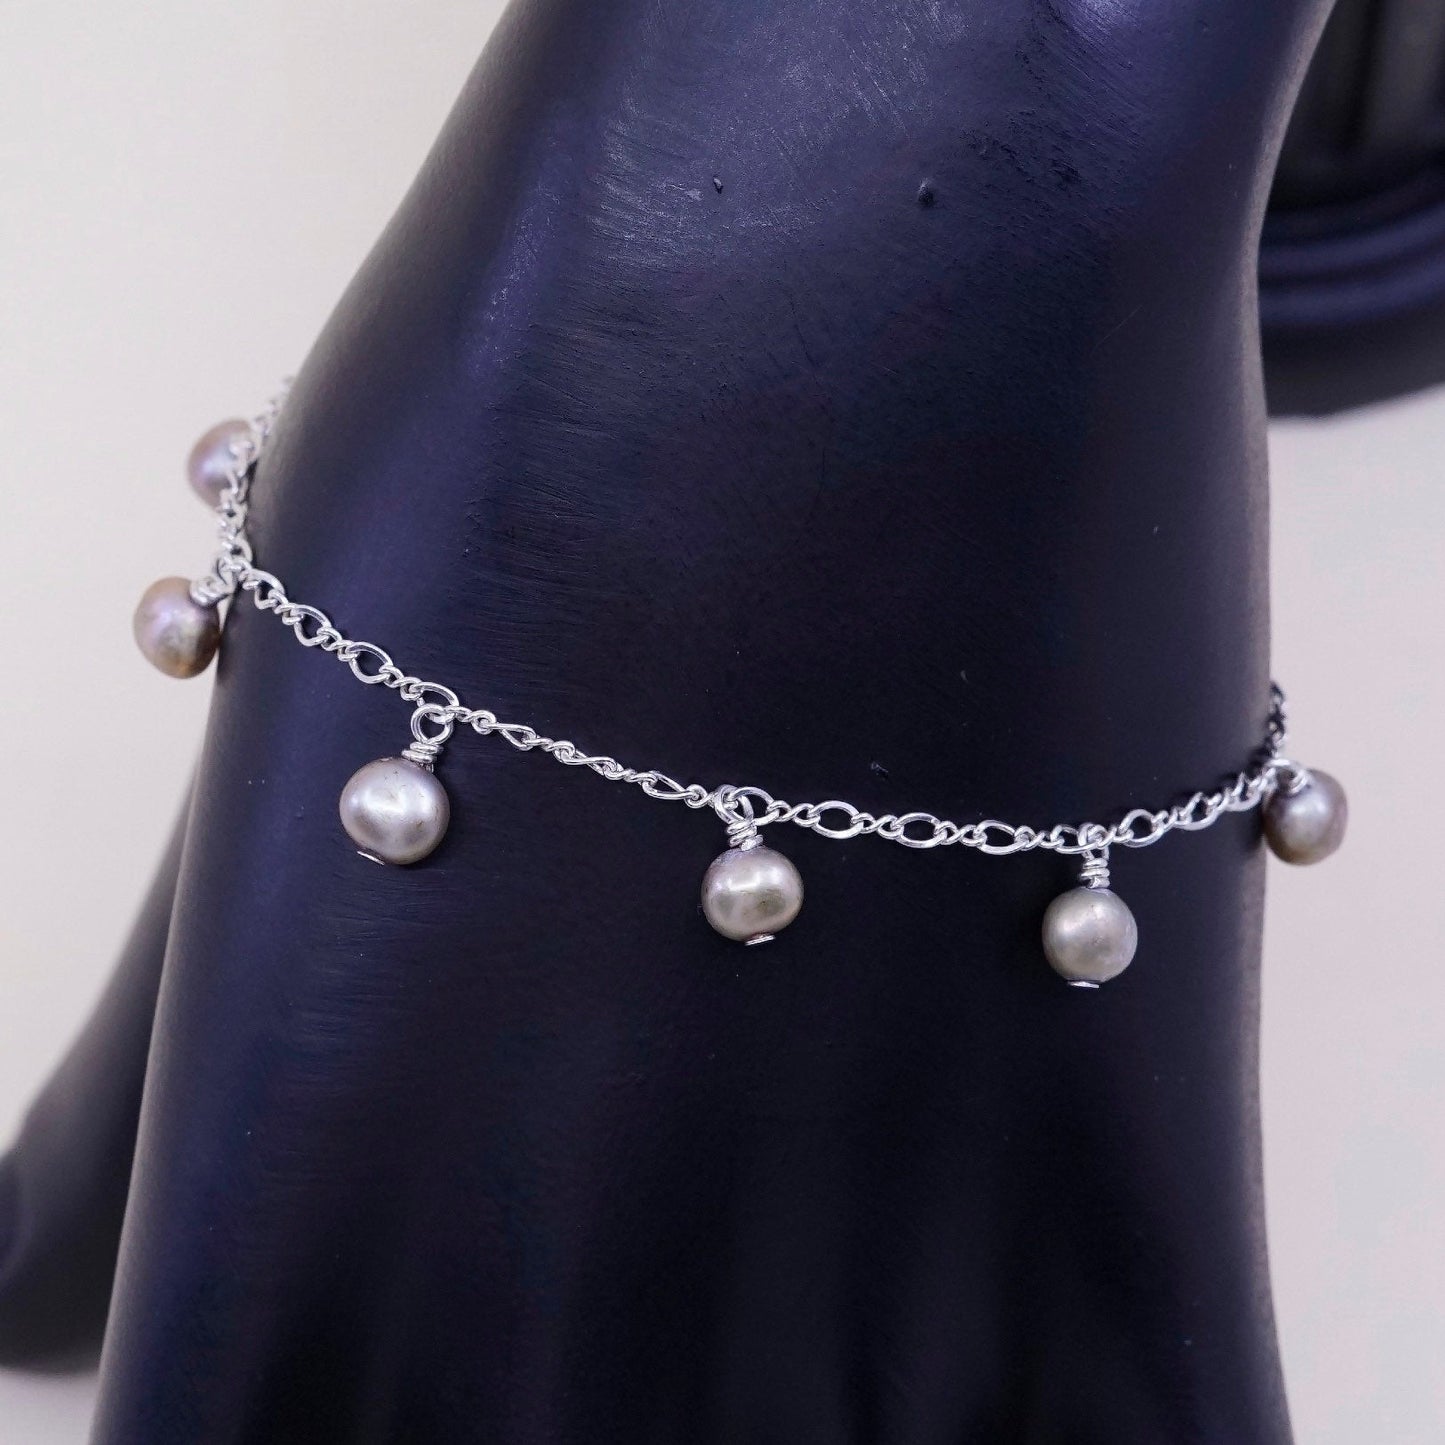 6.75”, Vintage handmade sterling silver bracelet with 925 pink pearl